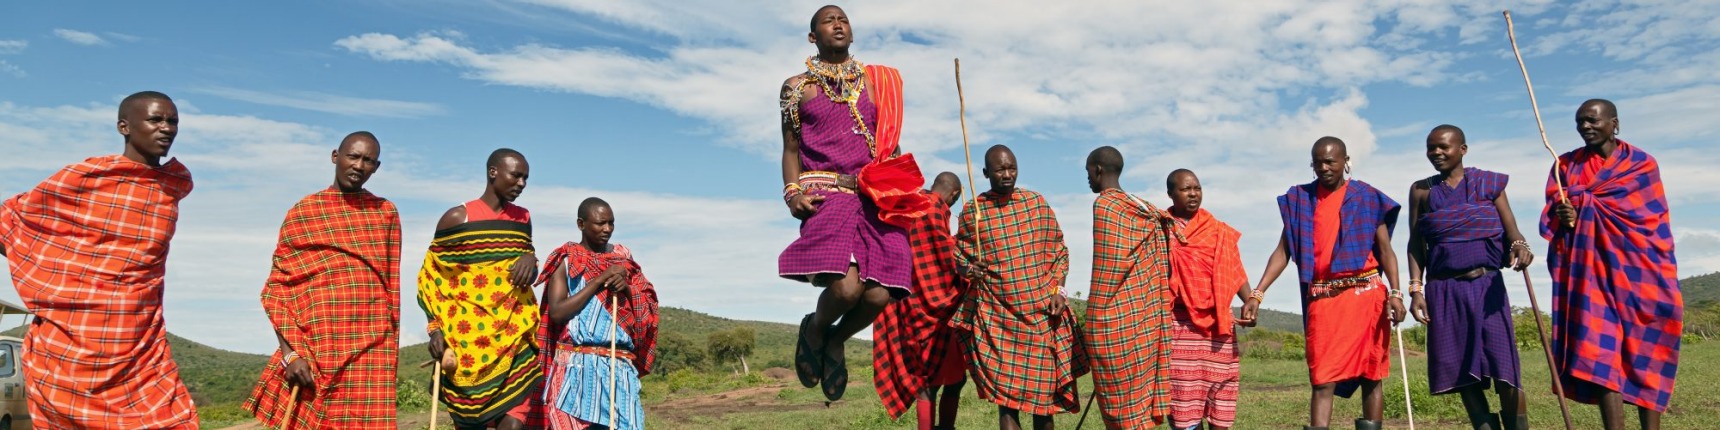 Africa masai mara